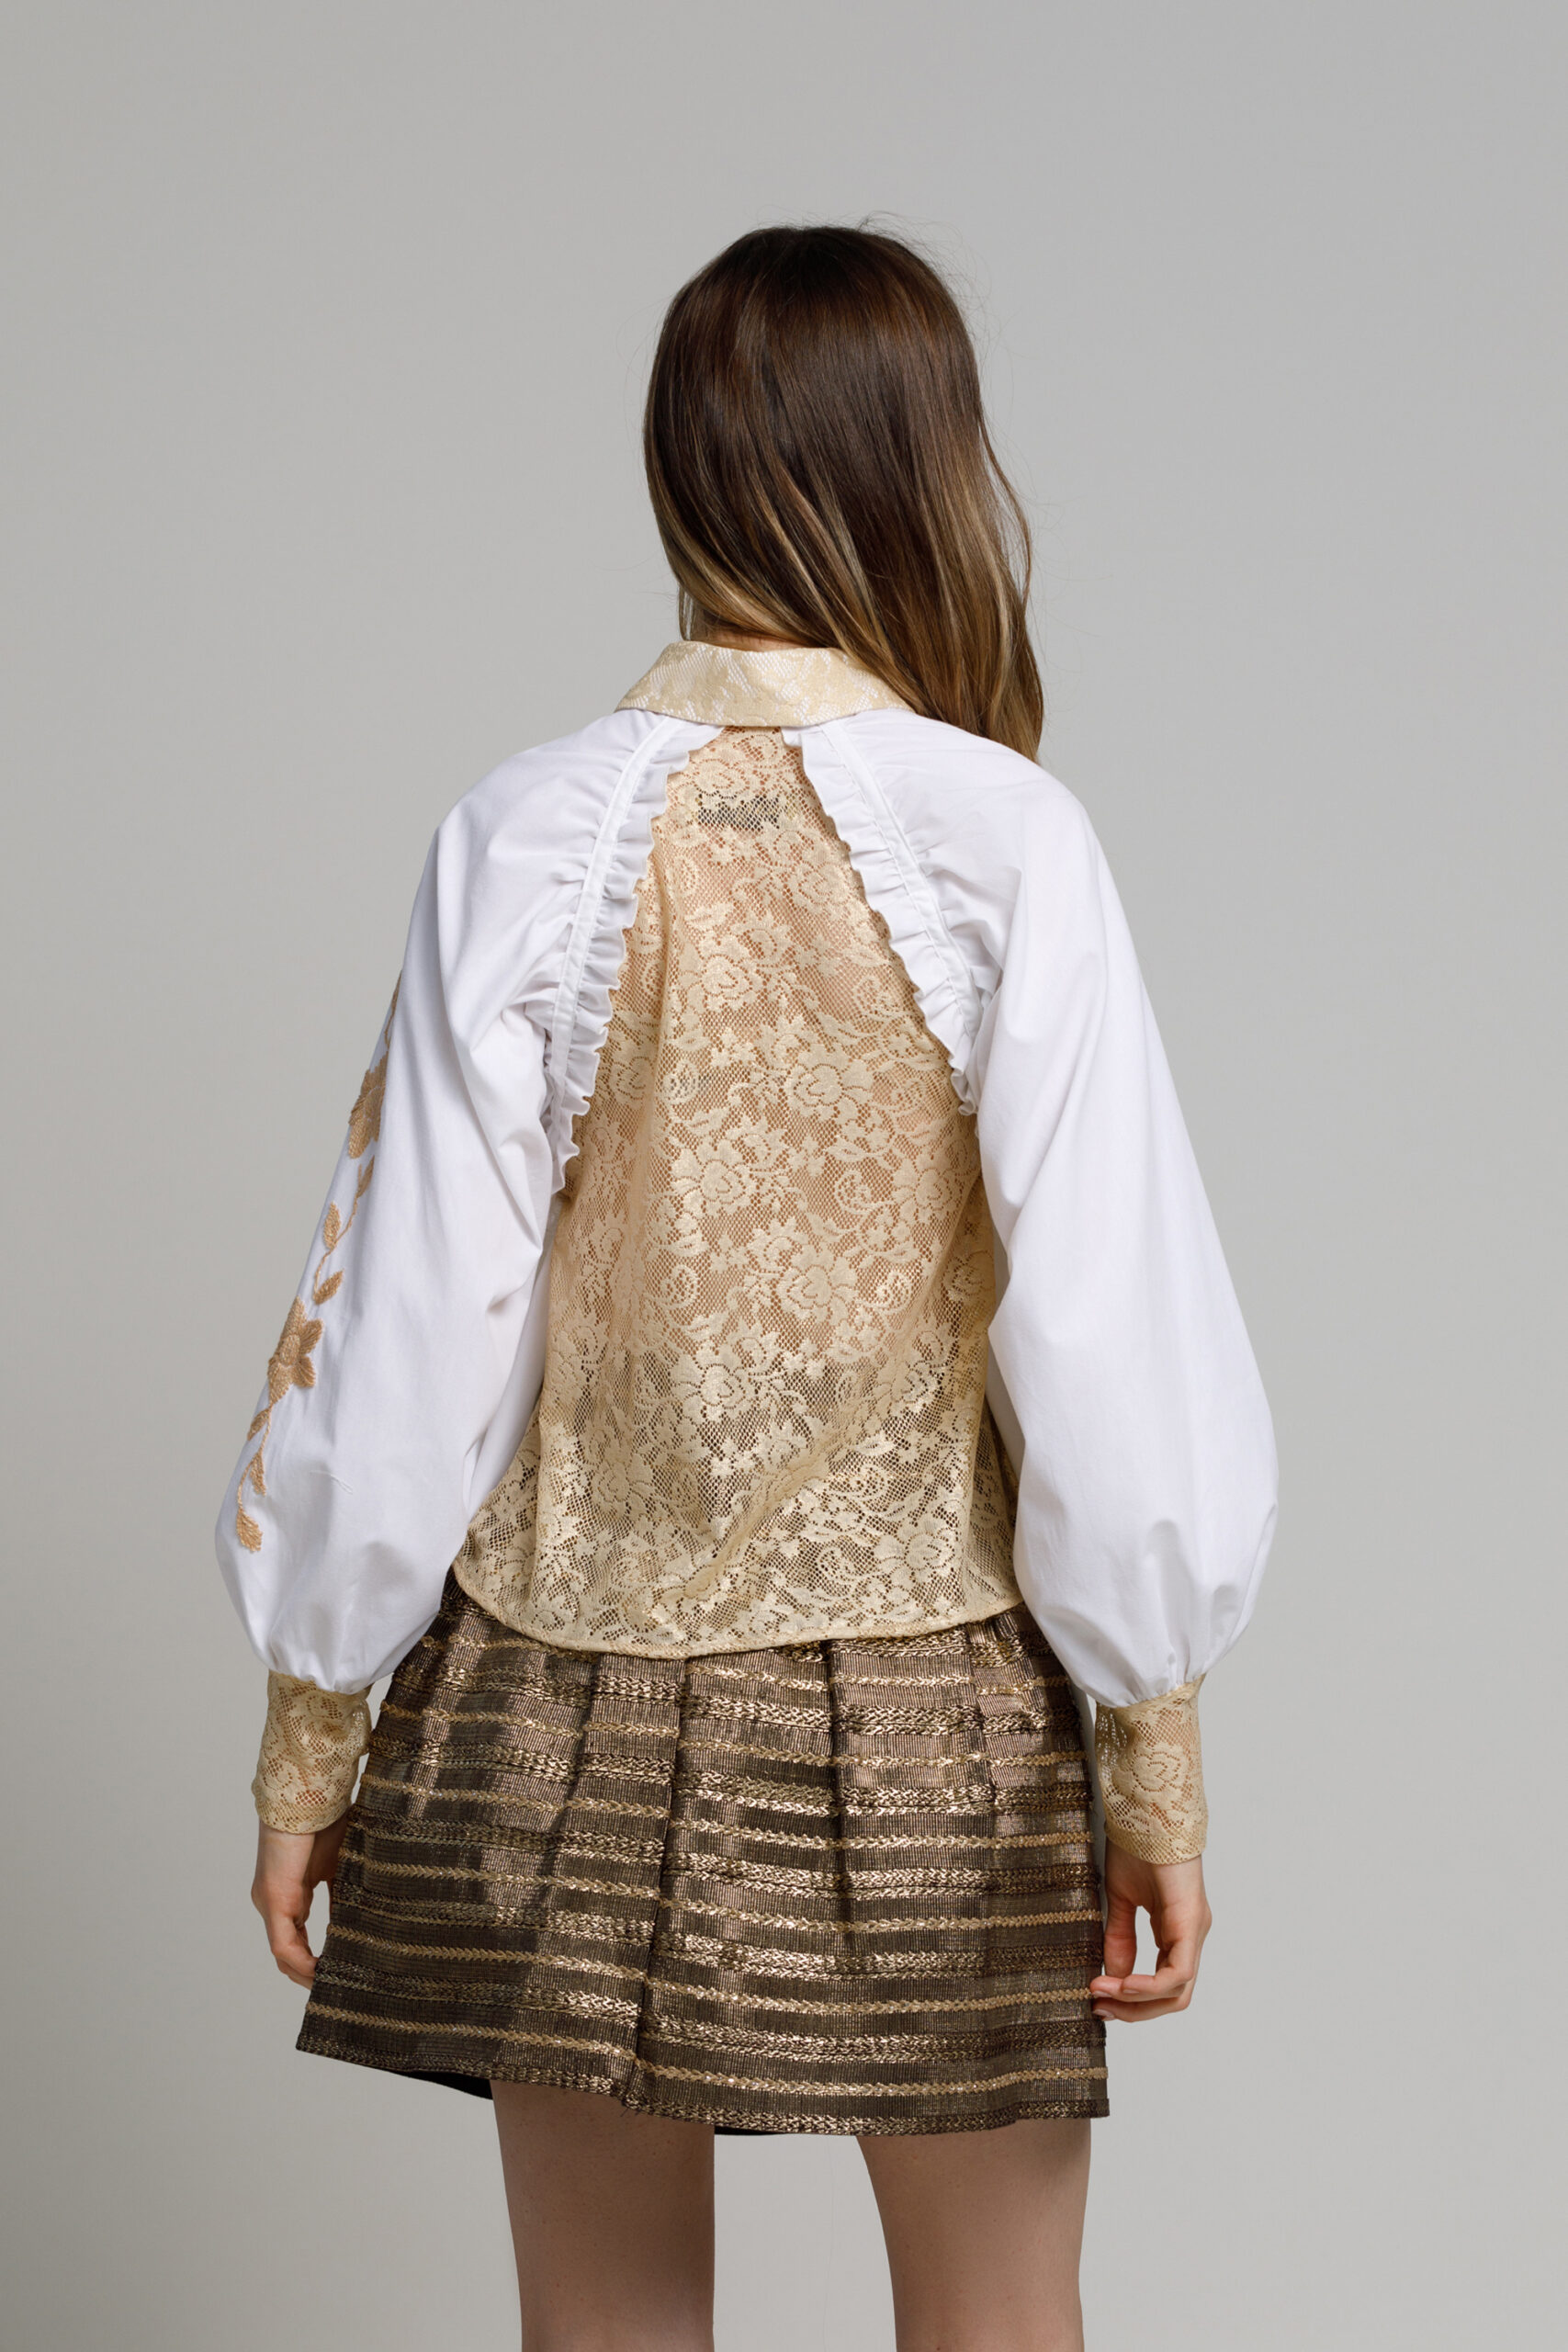 MARINA White shirt with golden lace. Natural fabrics, original design, handmade embroidery